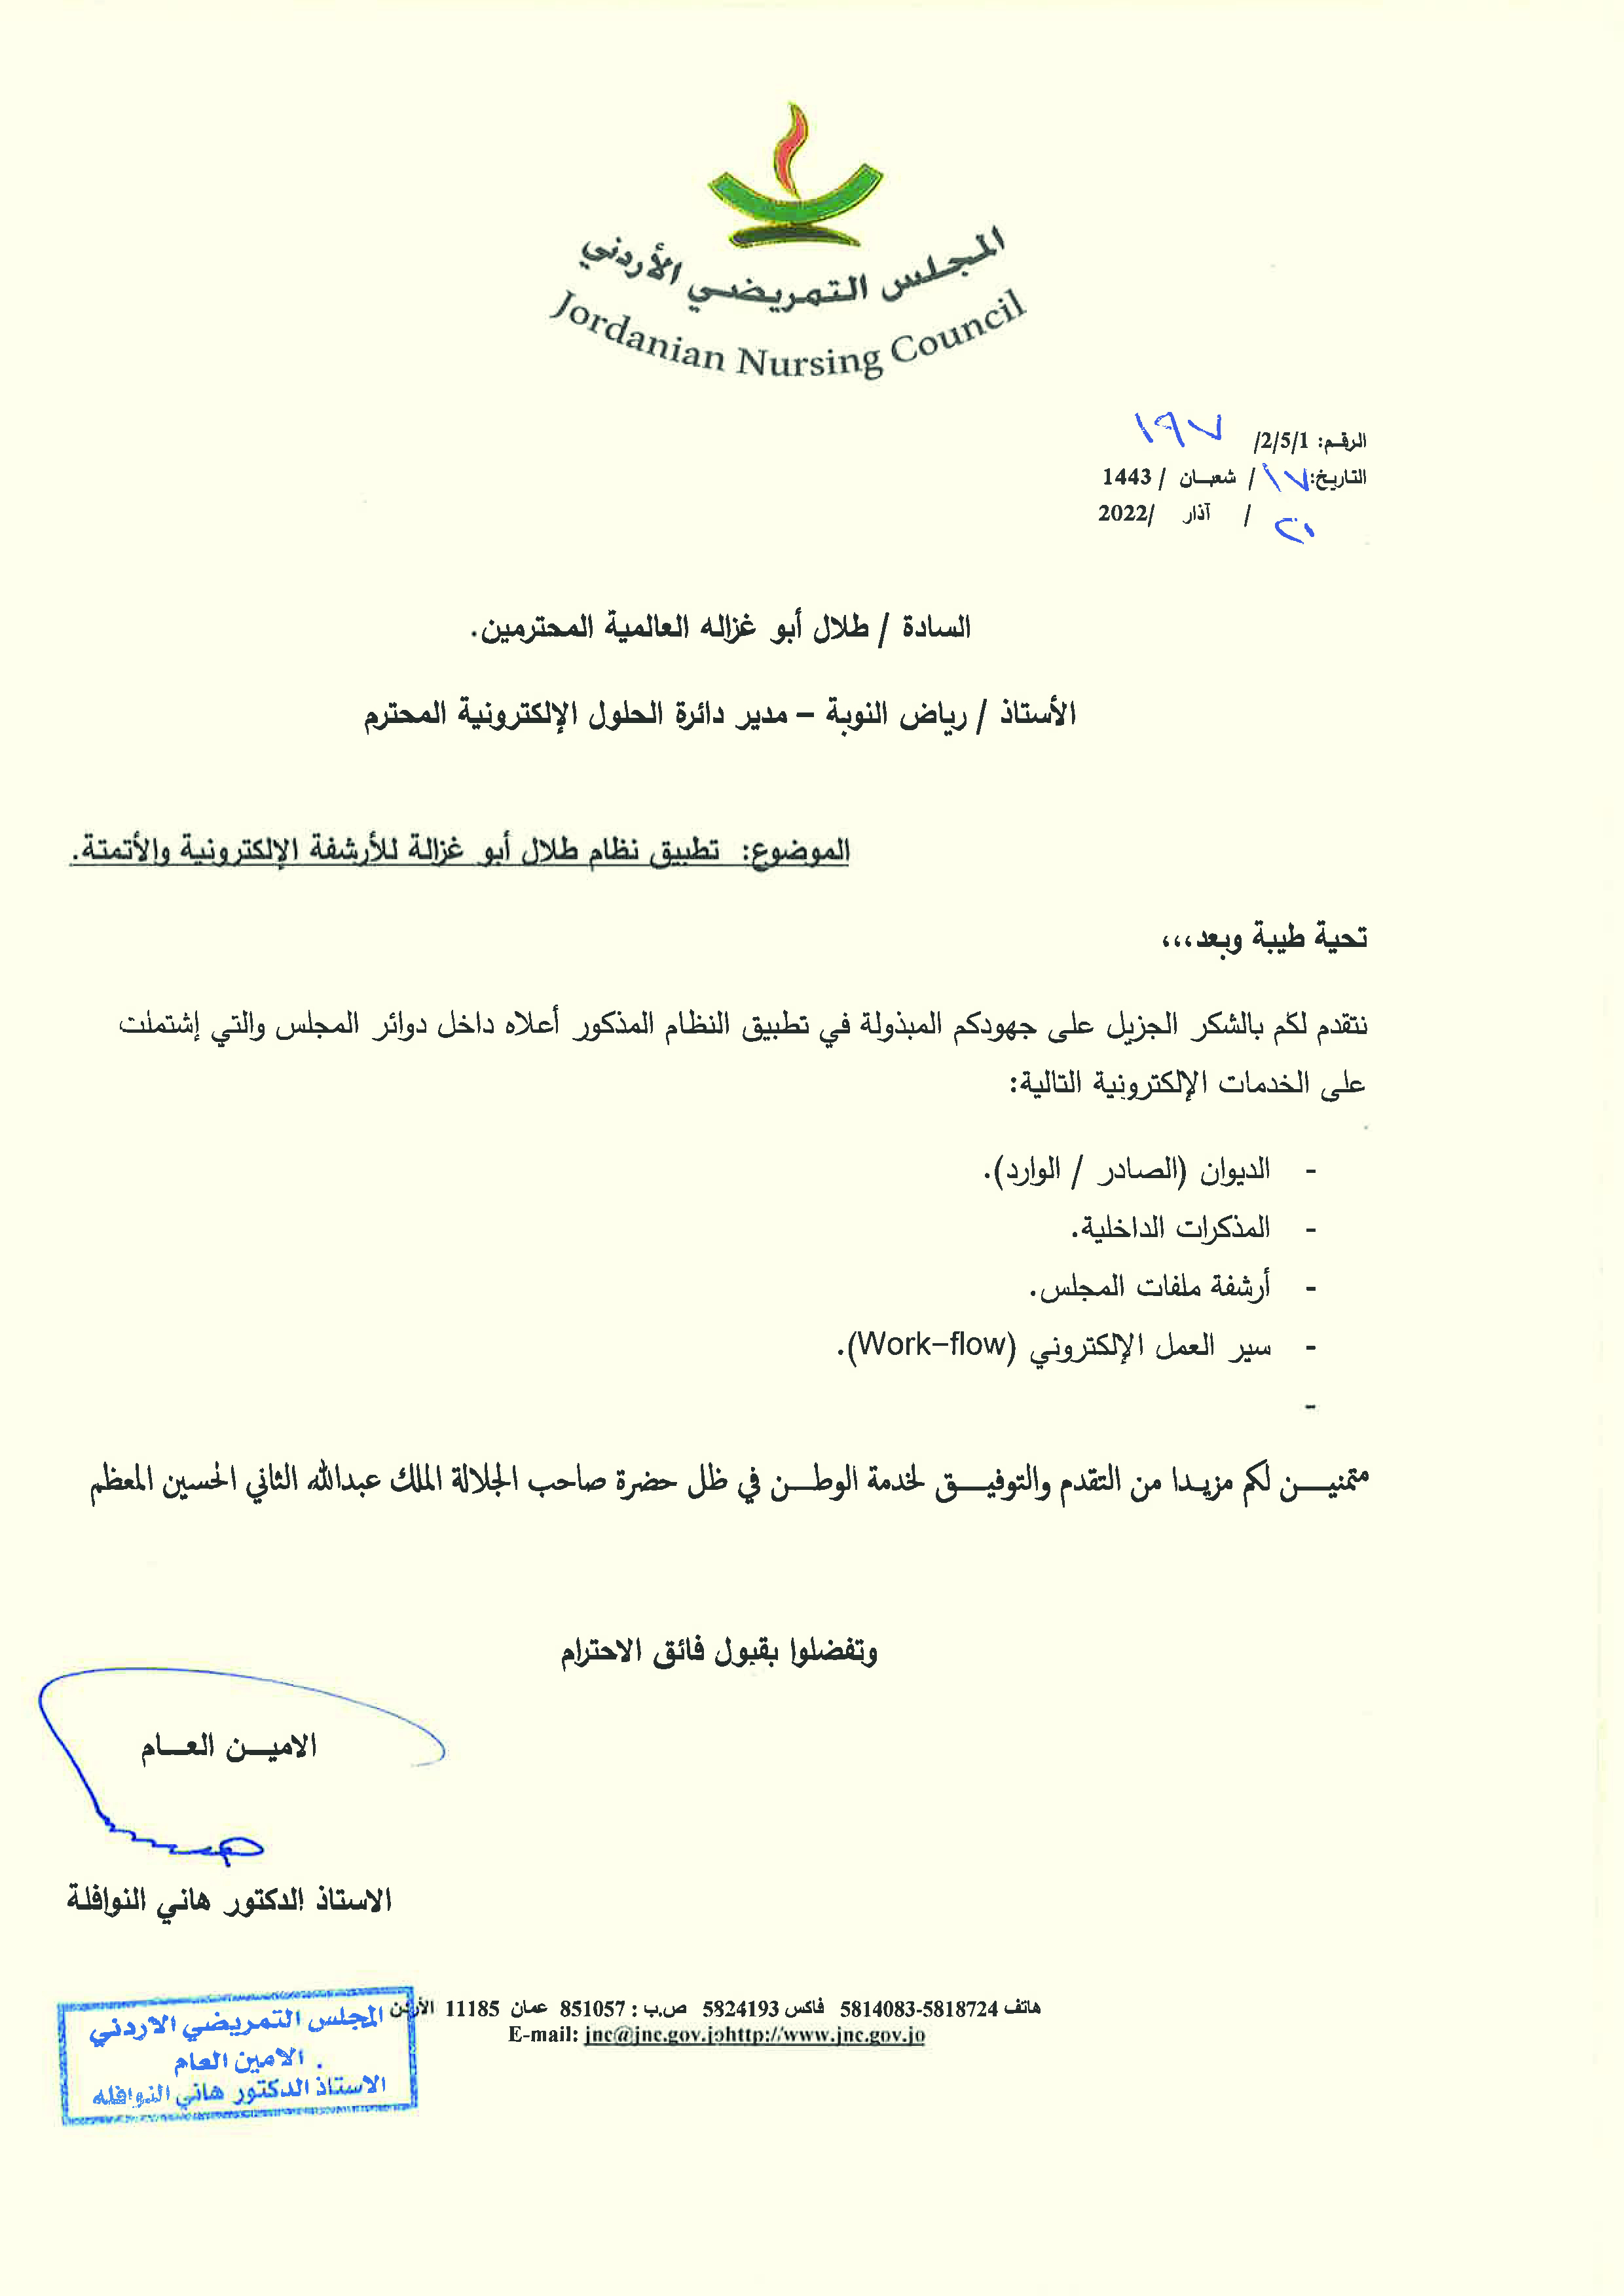 ‘Abu-Ghazaleh E-Solutions’ Applies E-Archiving System at the Jordanian Nursing Council 